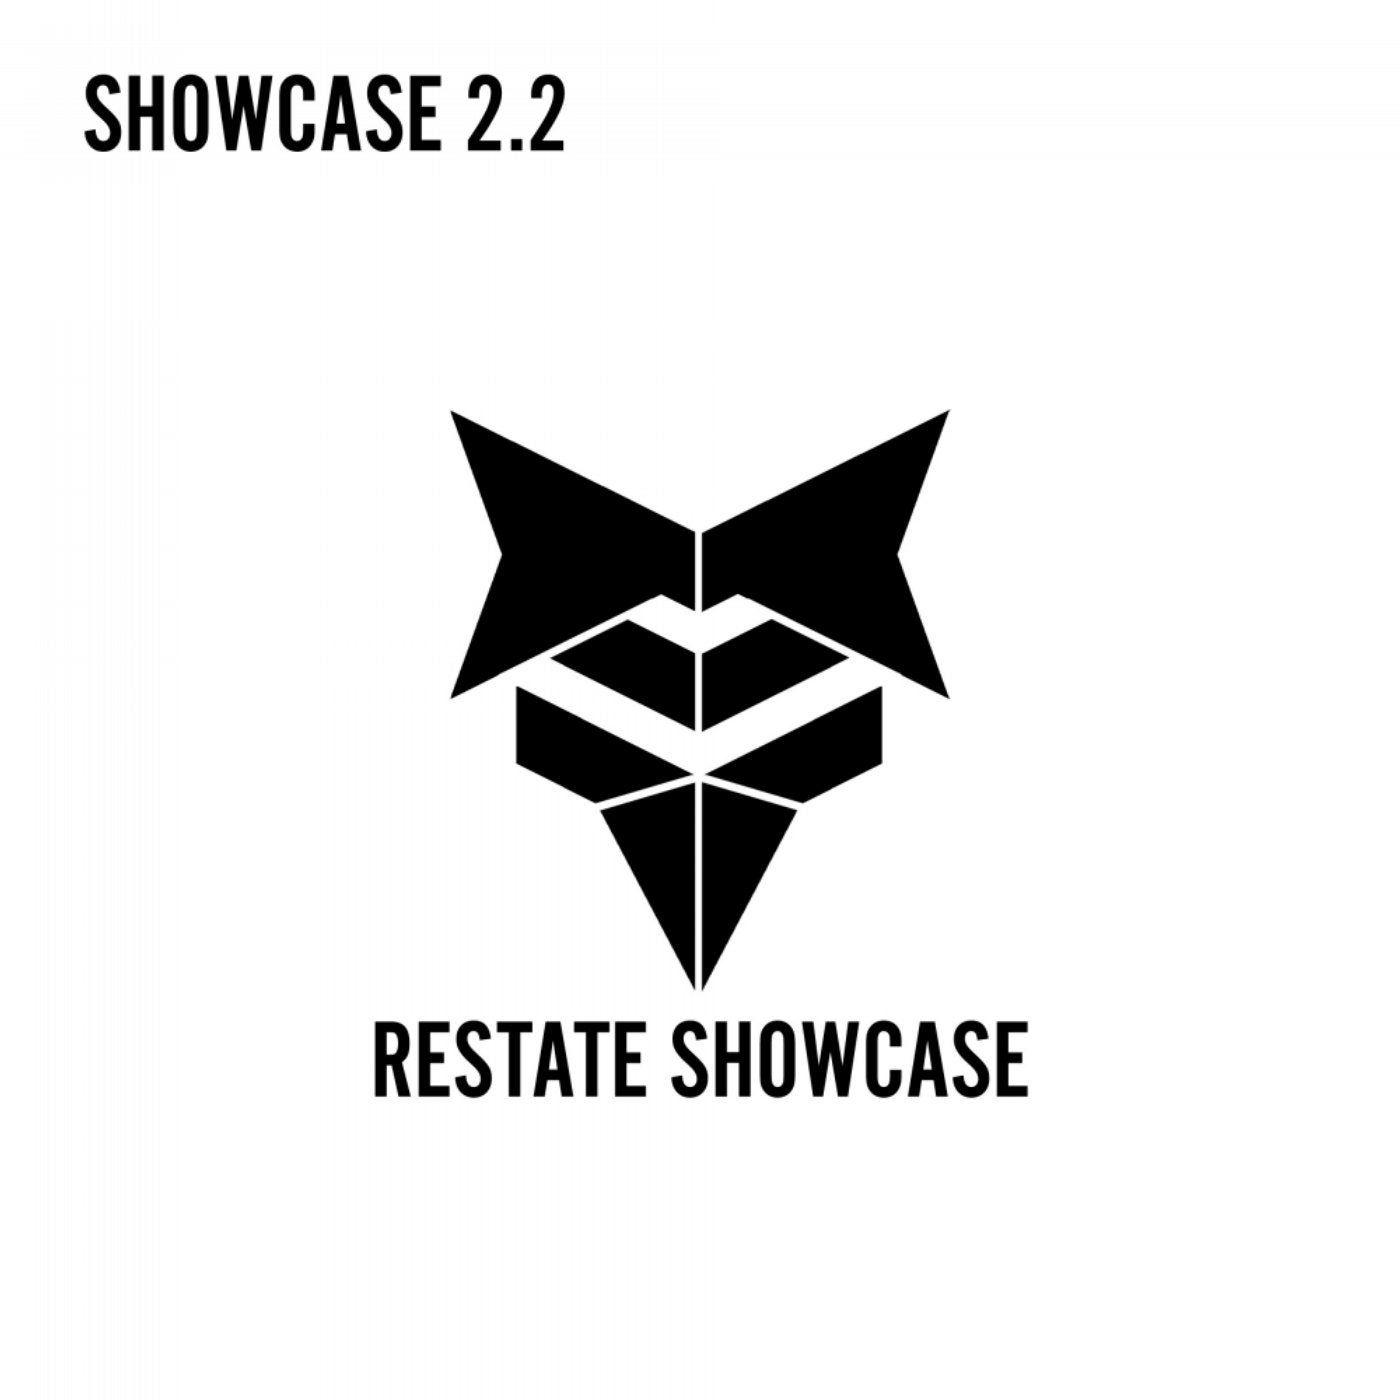 Showcase 2.2